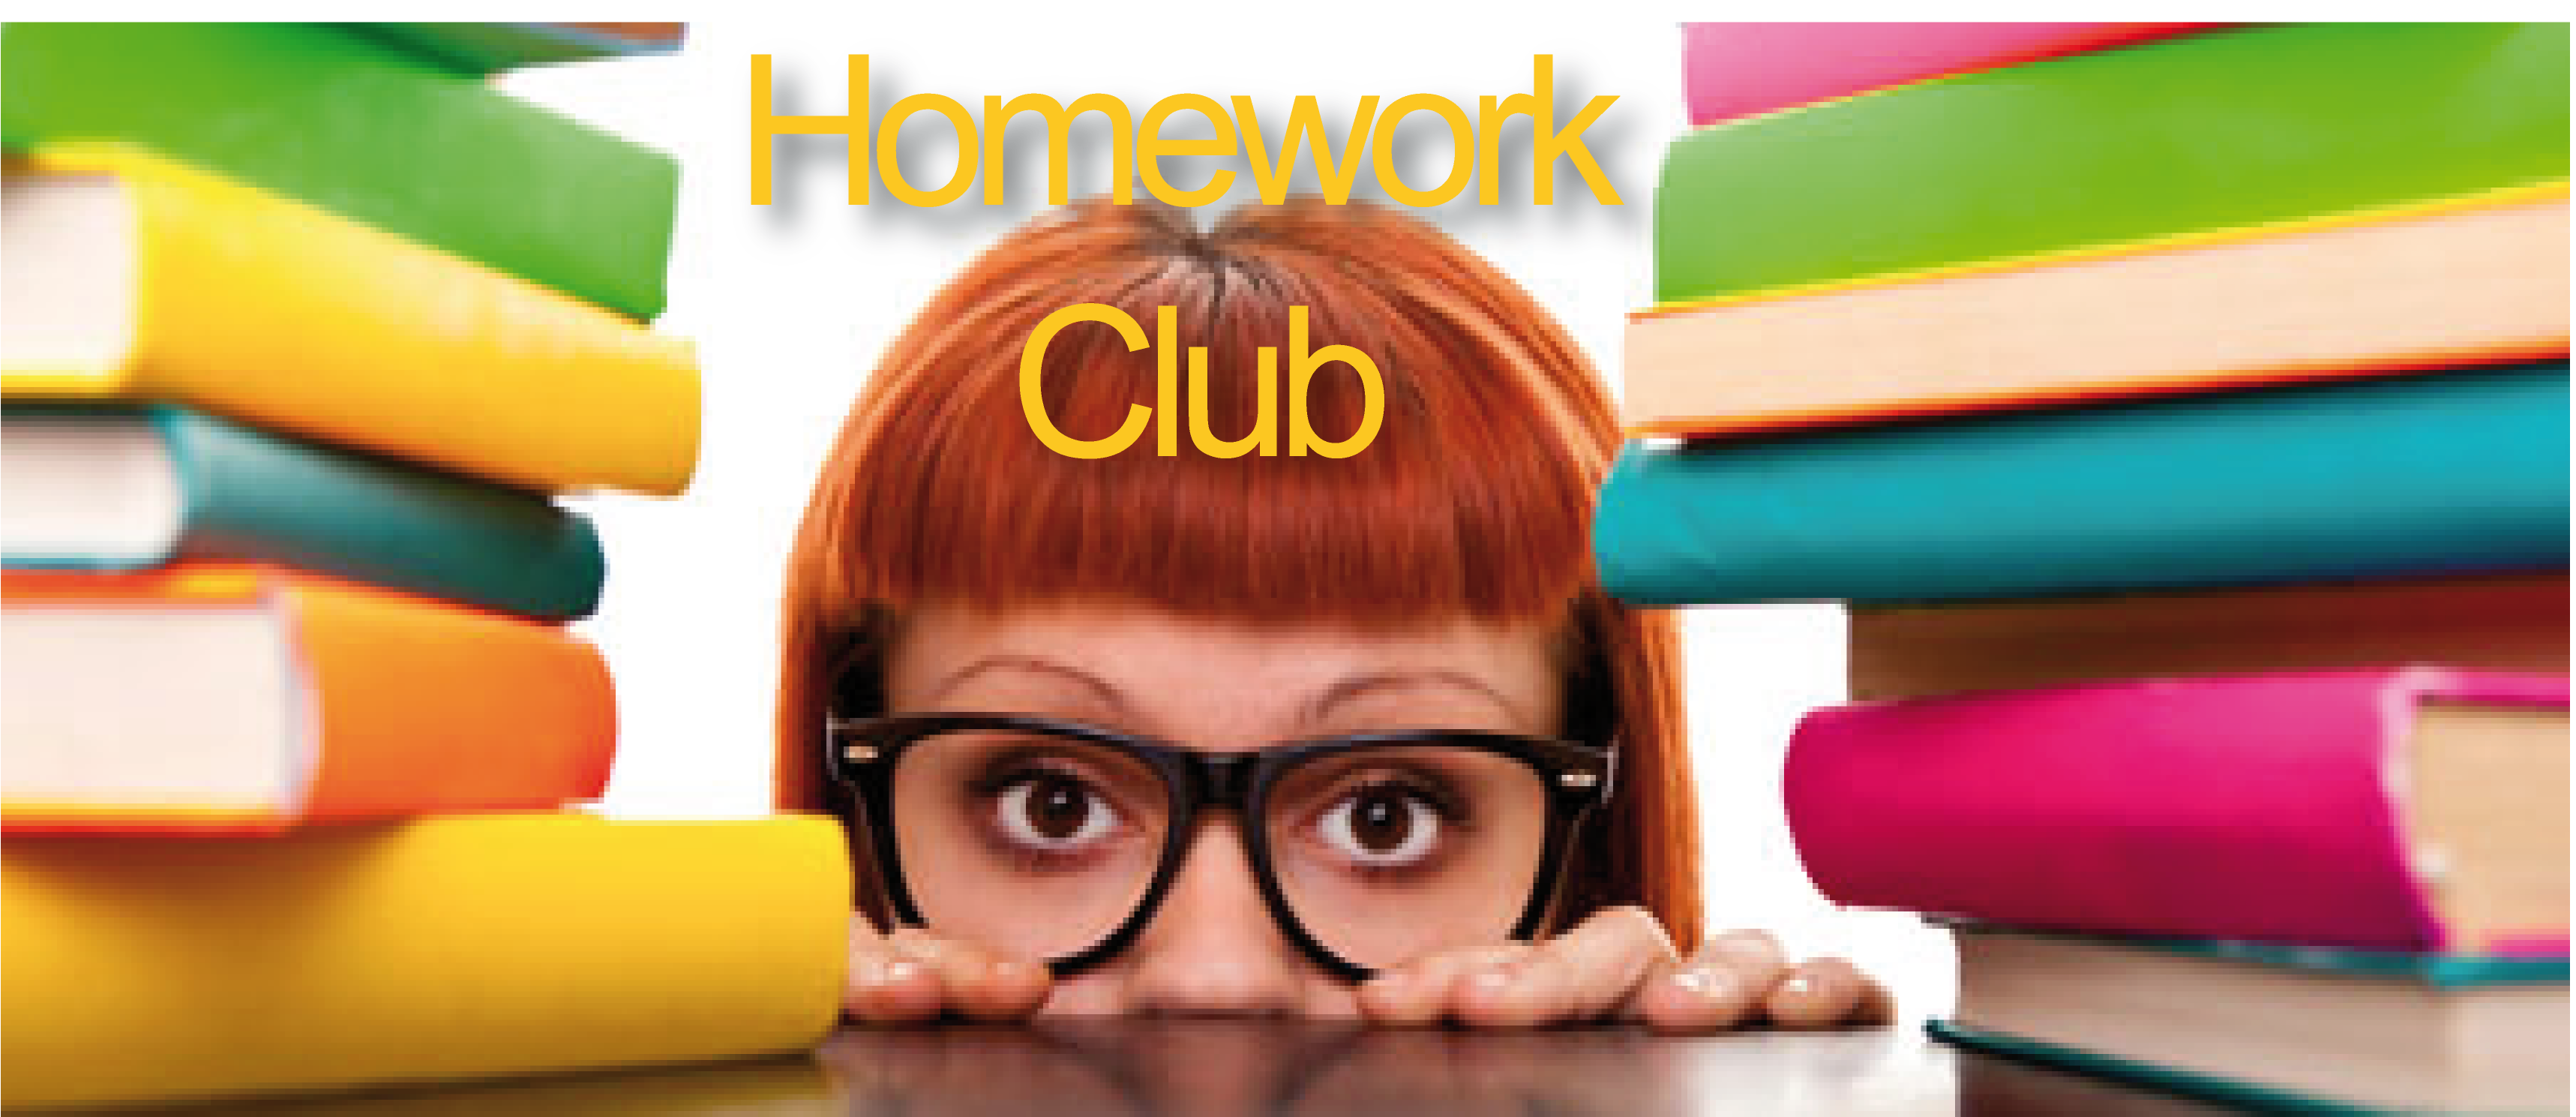 benefits of homework clubs